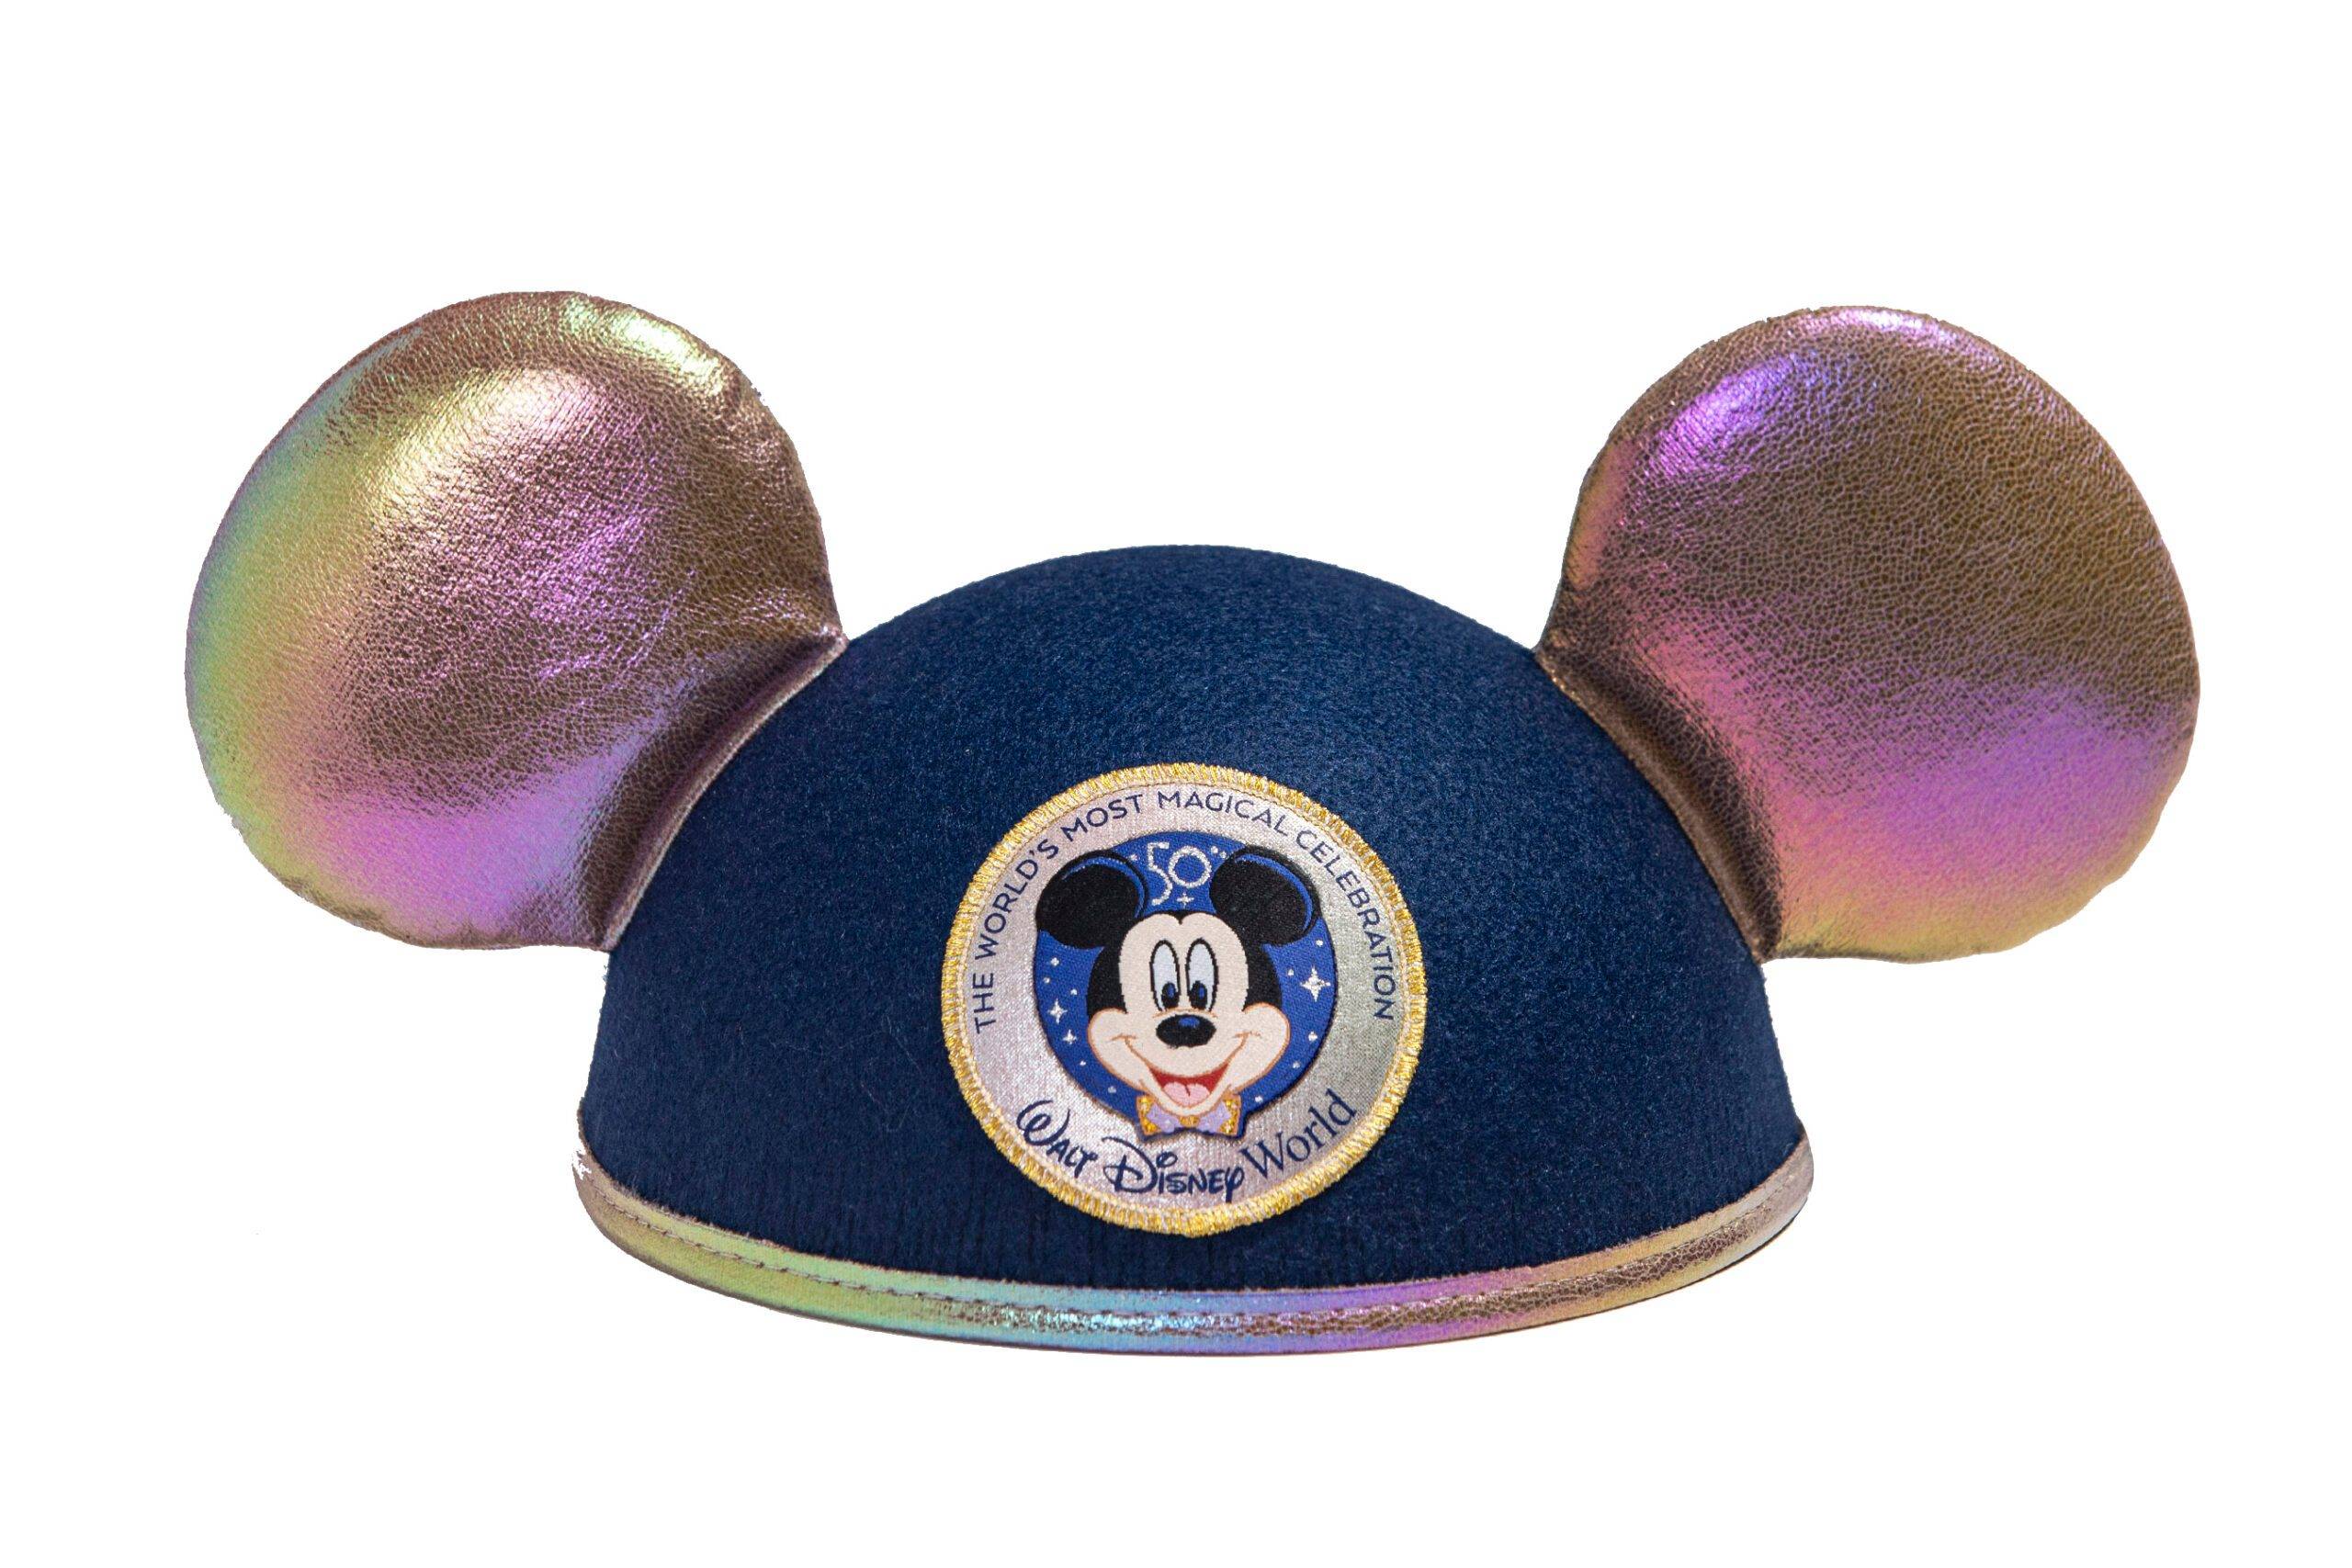 Walt Disney World 50th anniversary merchandise